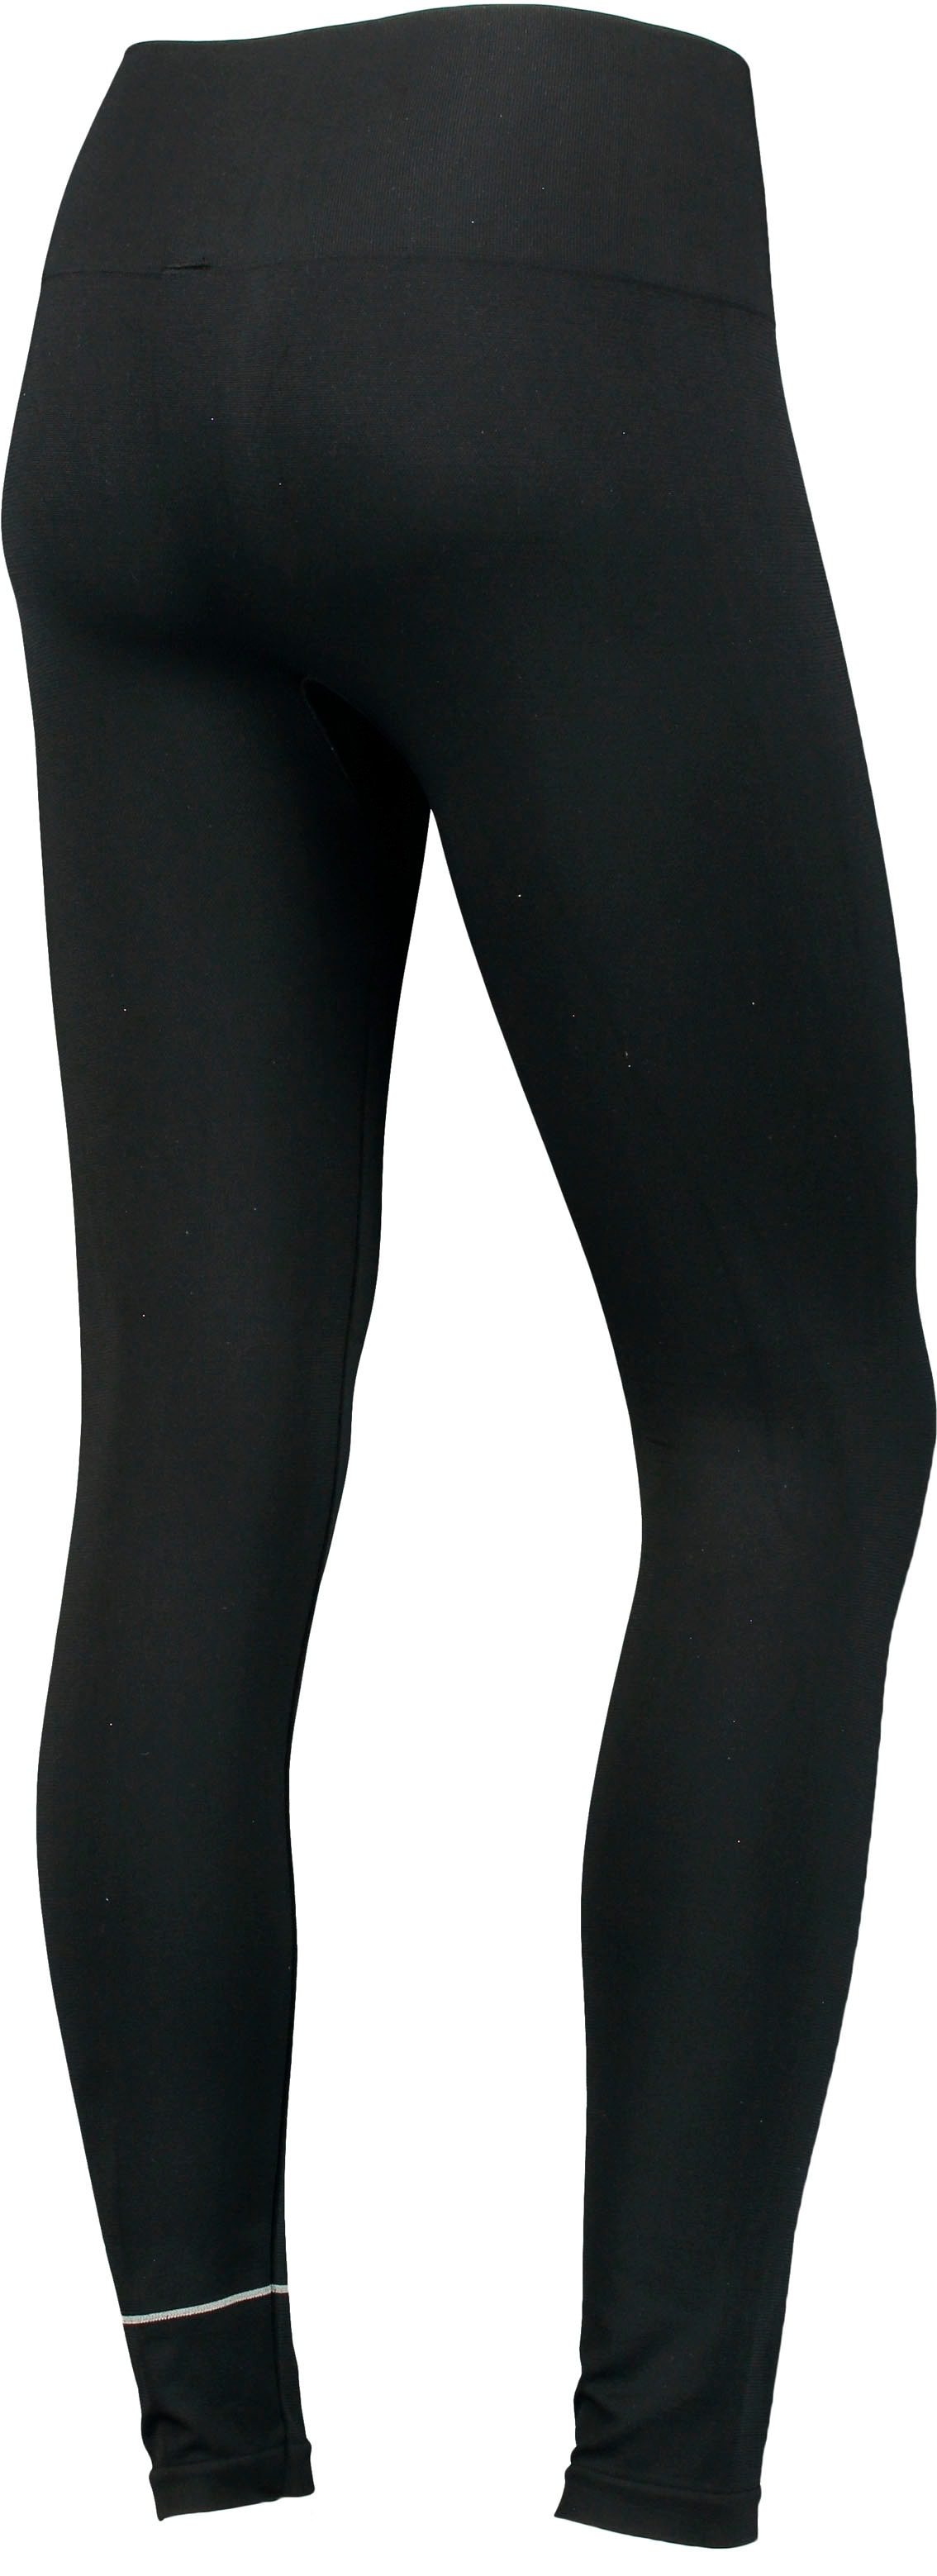 Calvin Klein Jeans Leggings, tlg.), LEGGING SEAMLESS WOMEN bei CKJ LOGO OTTO (1